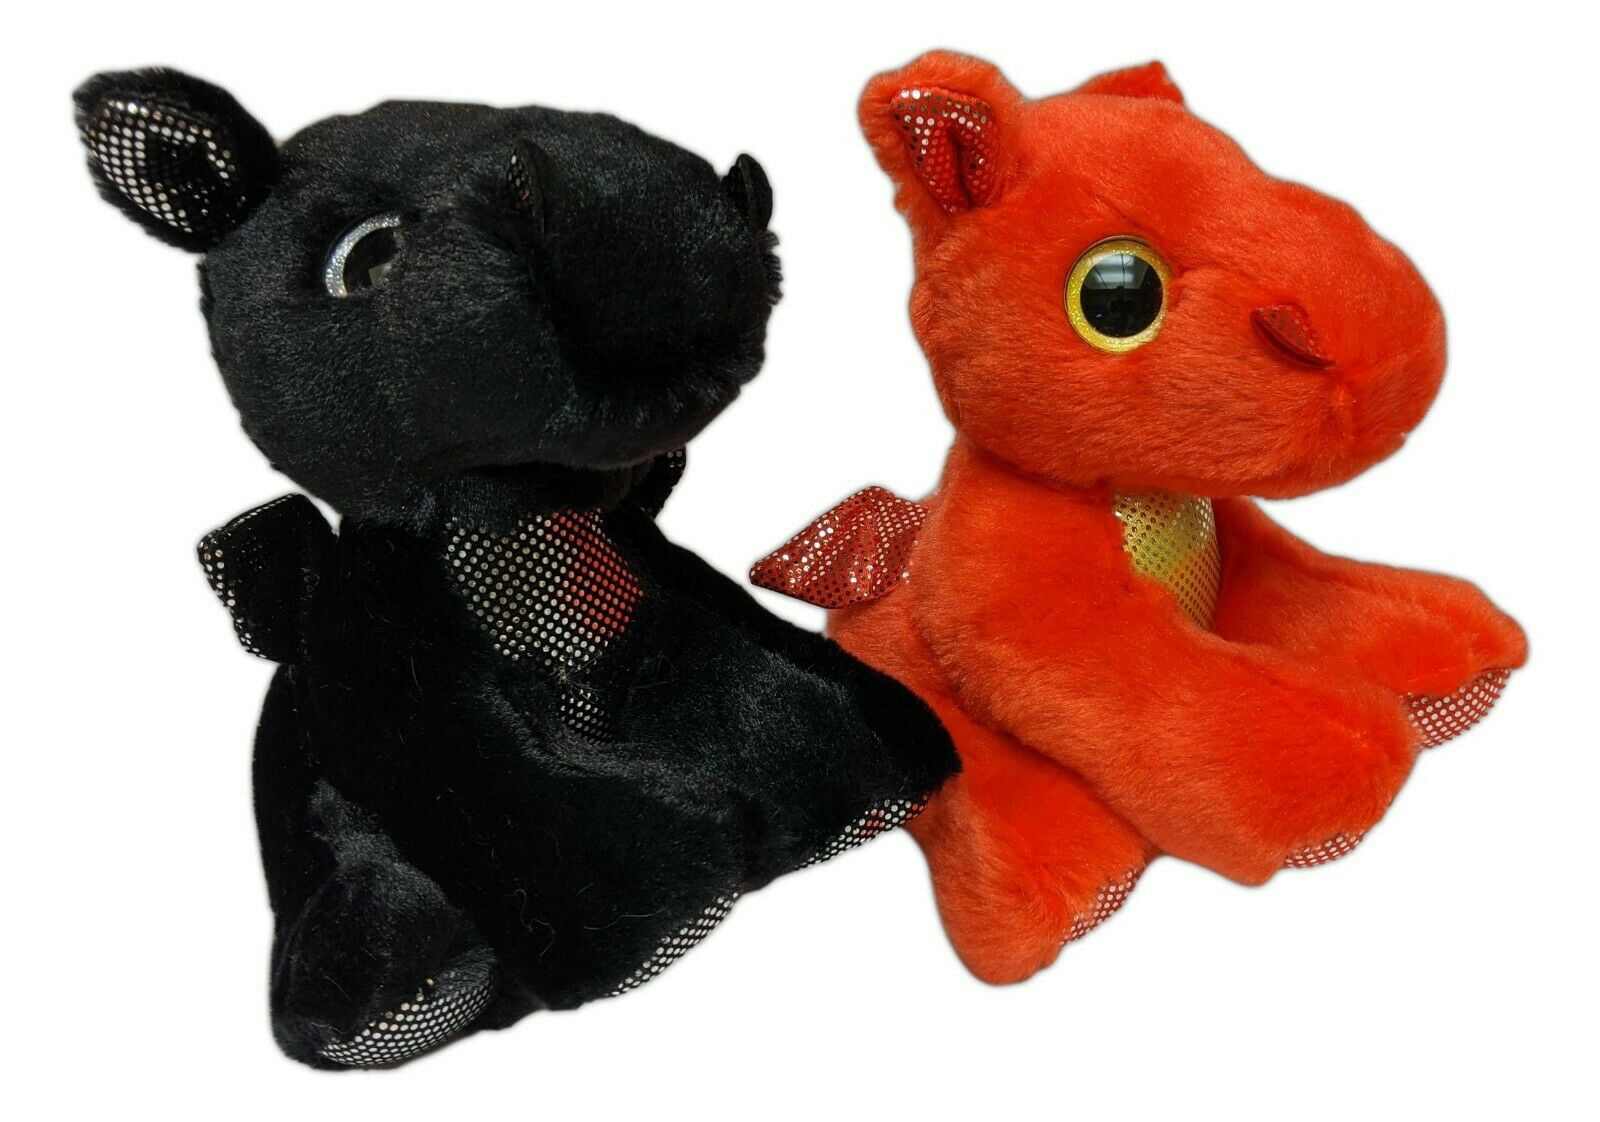 ROGUE BLACK DRAGON & FLAME RED DRAGON 7" Stuffed Animal Plush by Aurora 